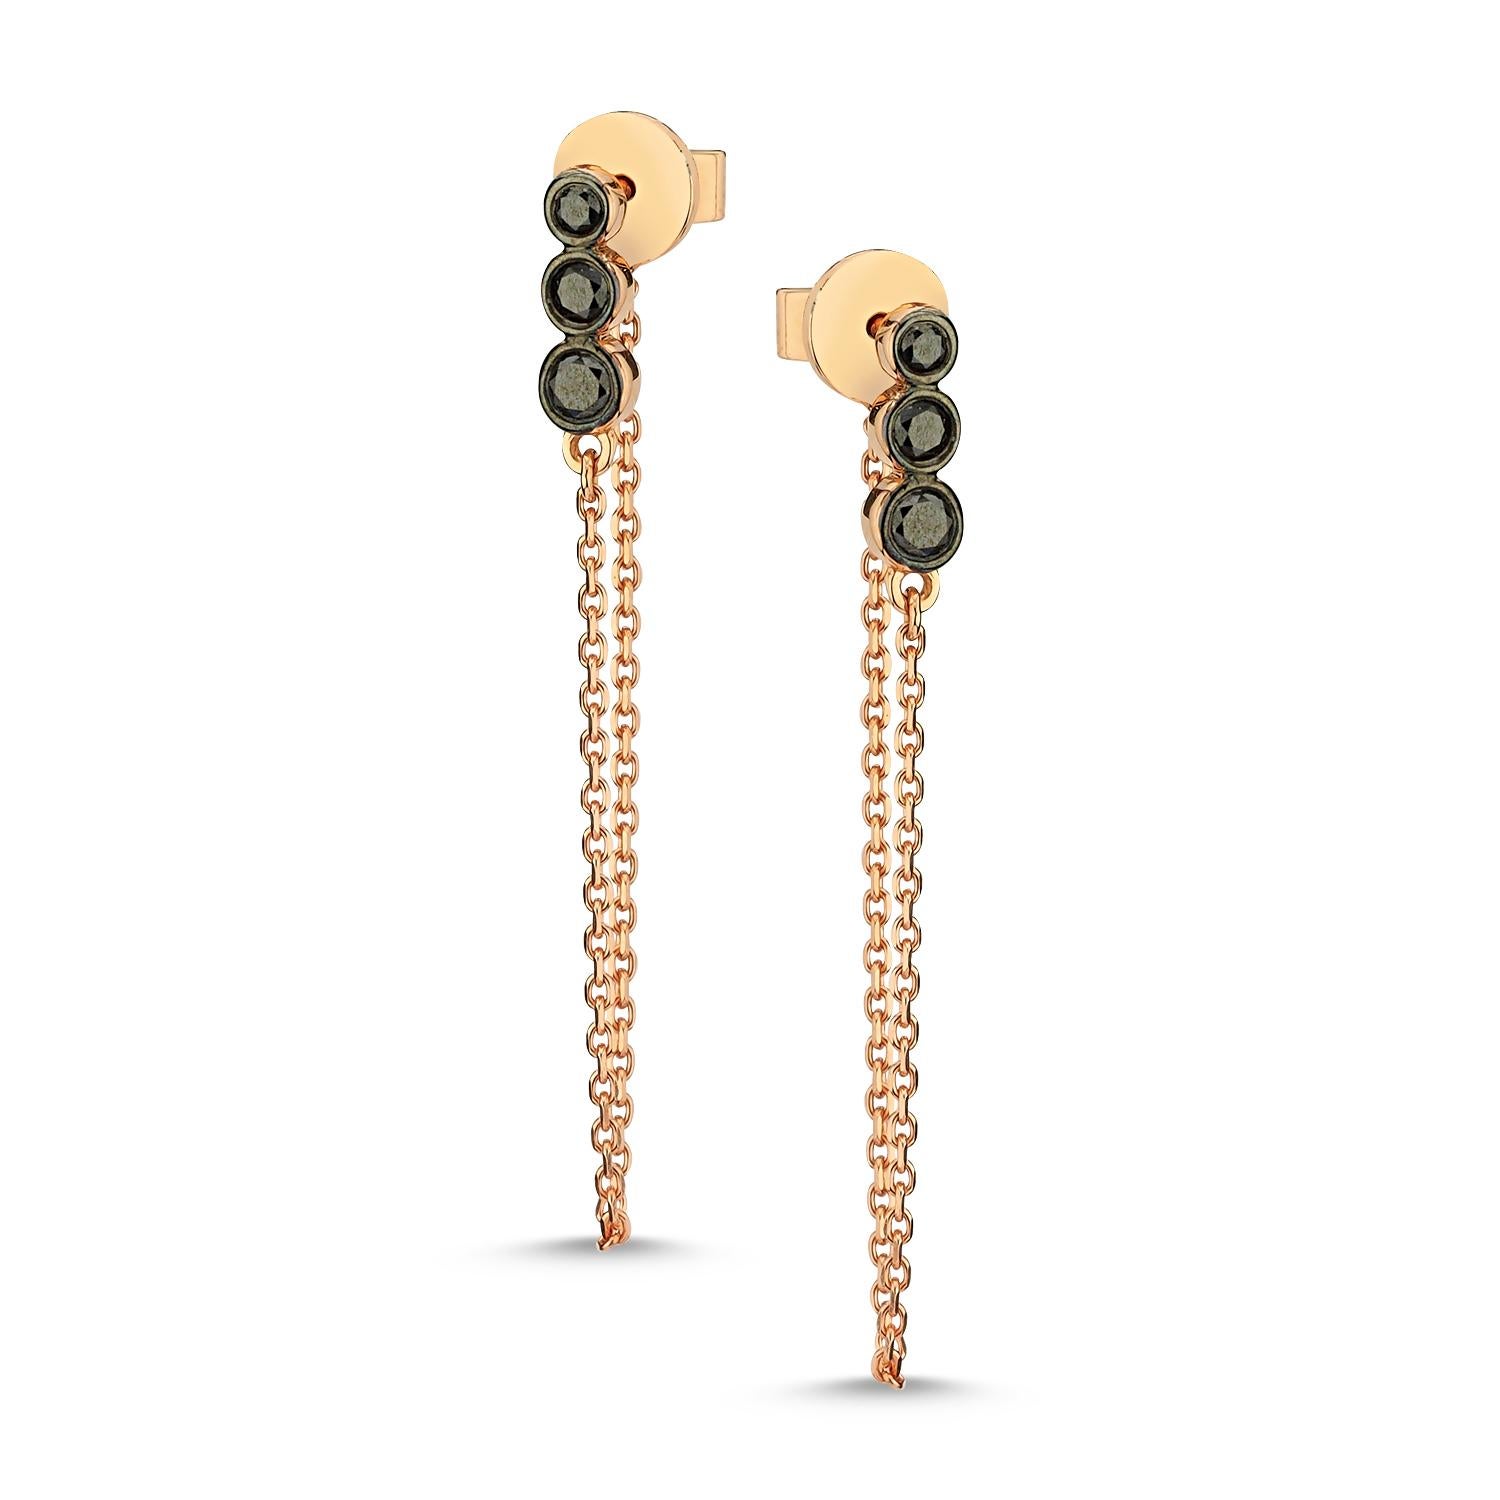 Three black diamond chain earring (single) with 14k rose gold by Selda Jewellery

Additional Information:-
Collection: Thunder Collection
14k Rose gold
0.11ct Black diamond
Length 3.5cm